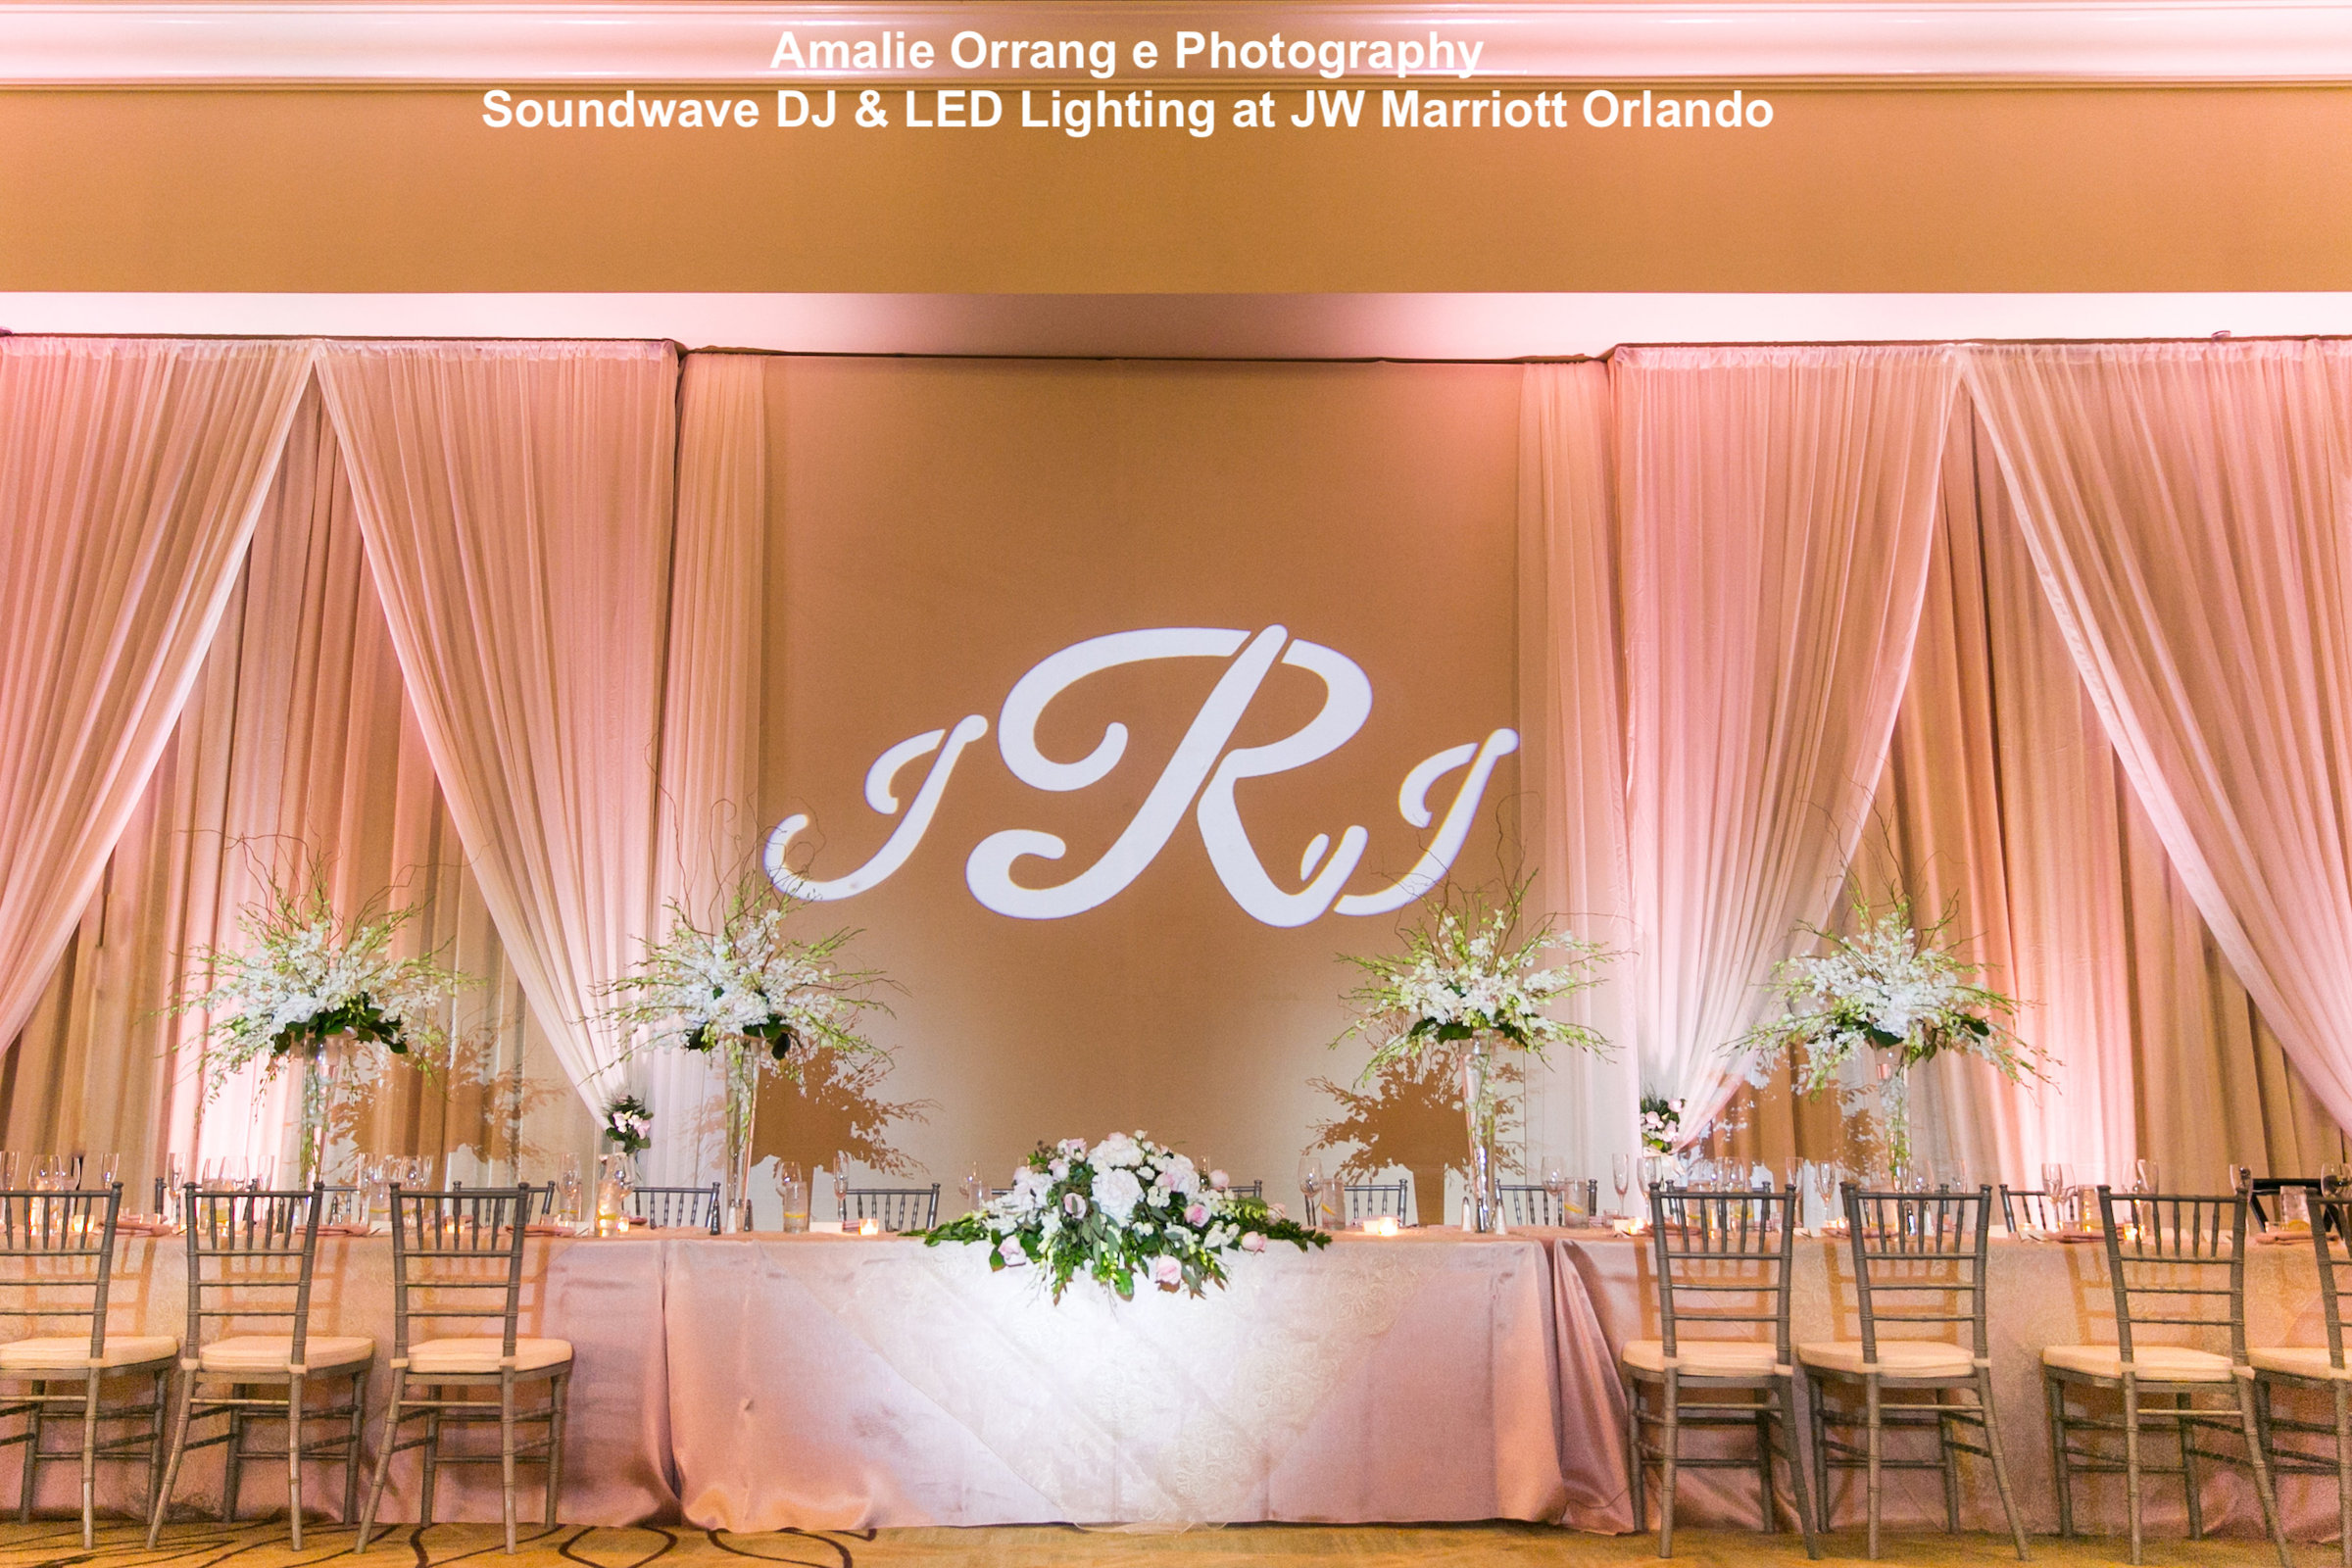 orlando wedding venue - orlando led wedding lighting - soundwave entertainment - orlando, fl